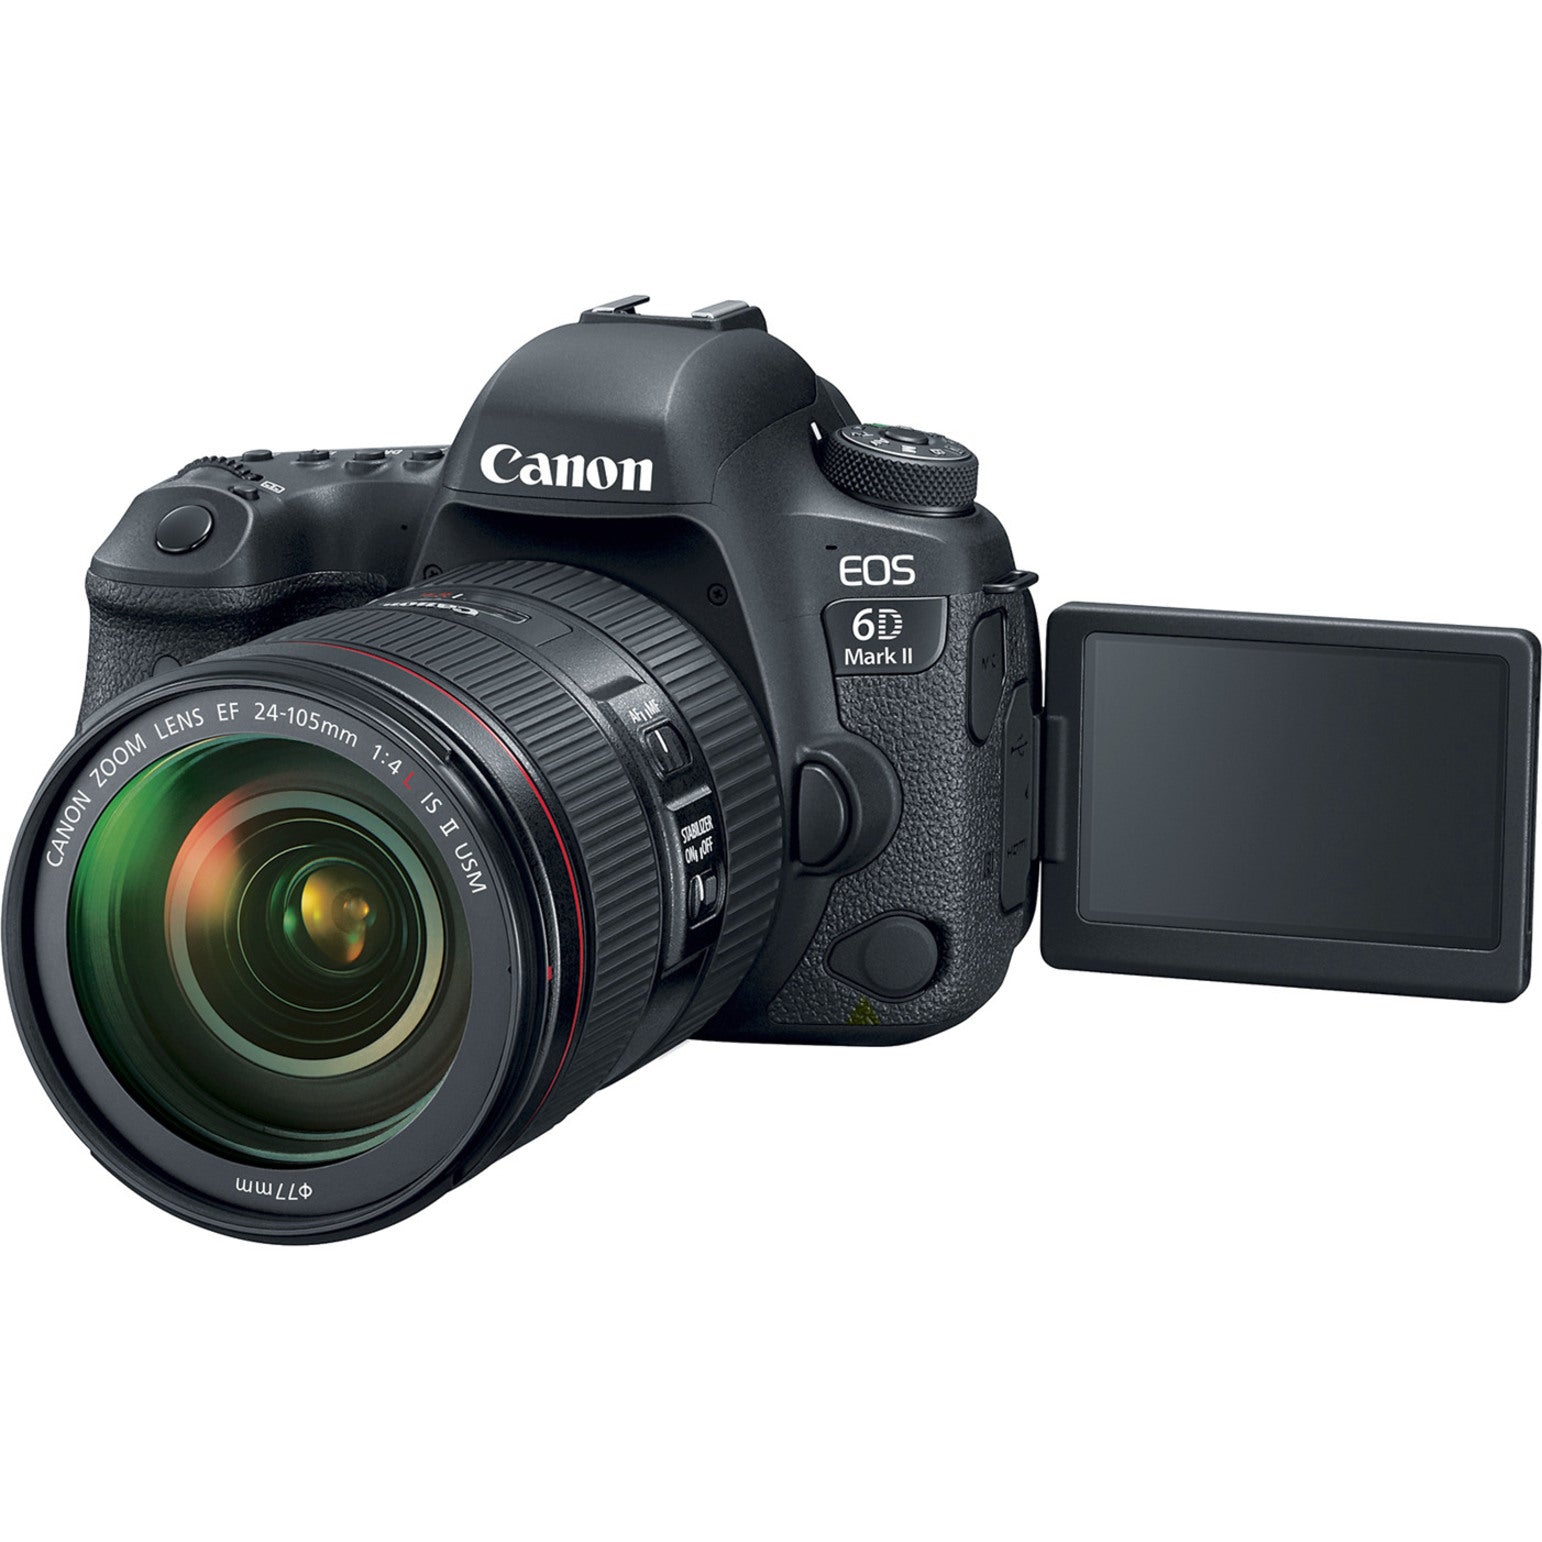 Canon 1897C009 EOS 6D Mark II Digital SLR Camera with Lens, 26.2 Megapixel, 4.4x Optical Zoom